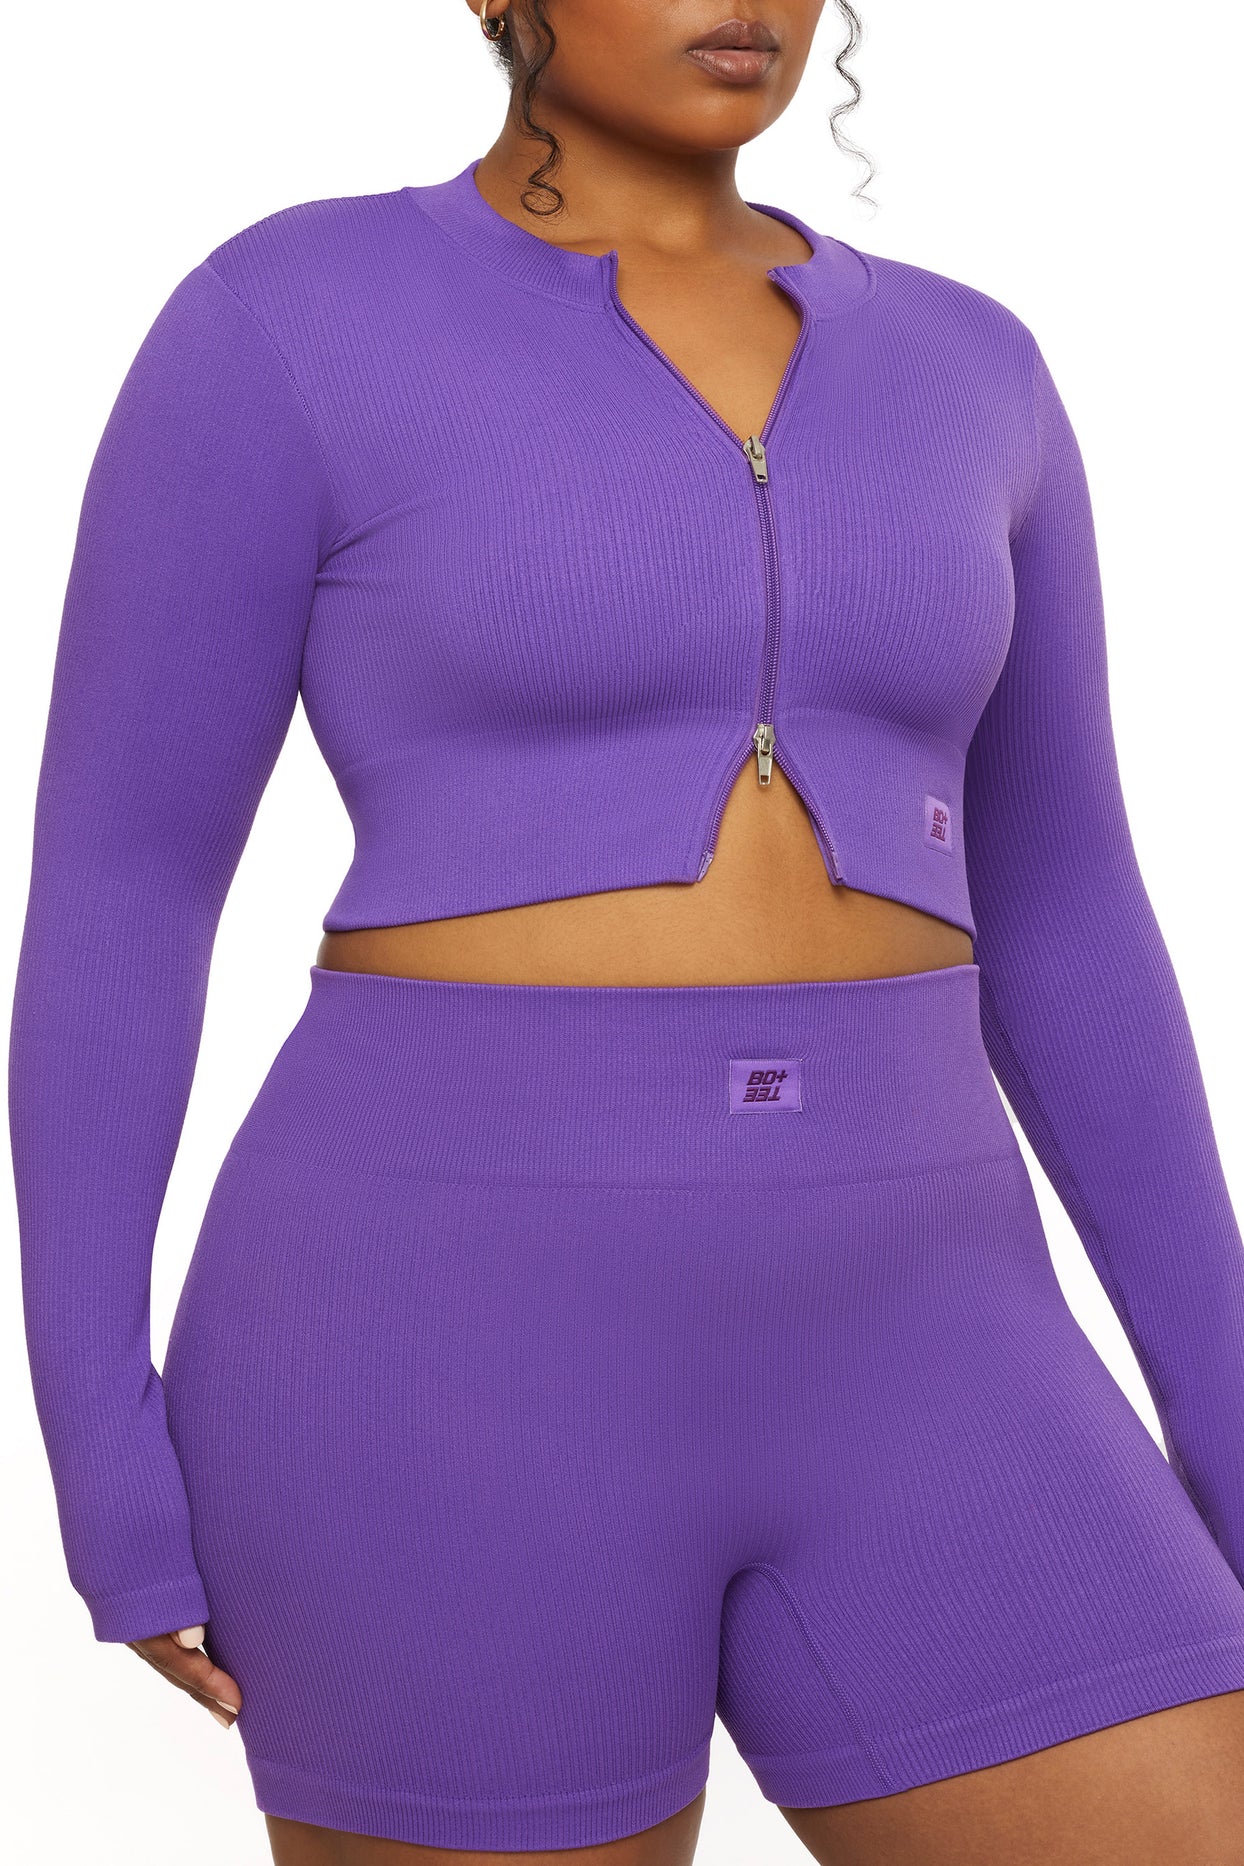 Long Sleeve Zip Crop Top in Purple